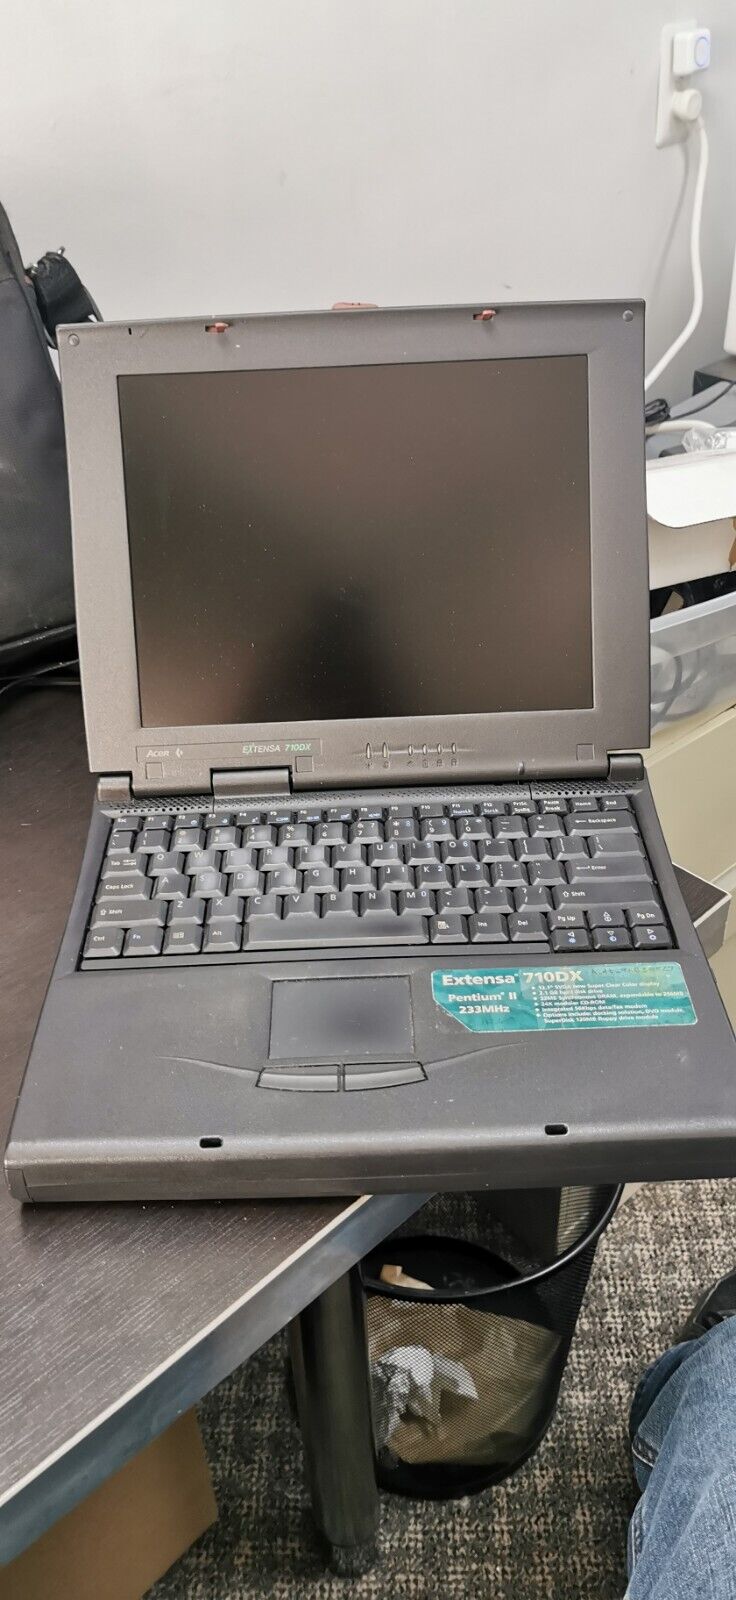 Acer Extensa 710DX Model 700 Notebook Laptop Computer Vintage Rare For Parts 